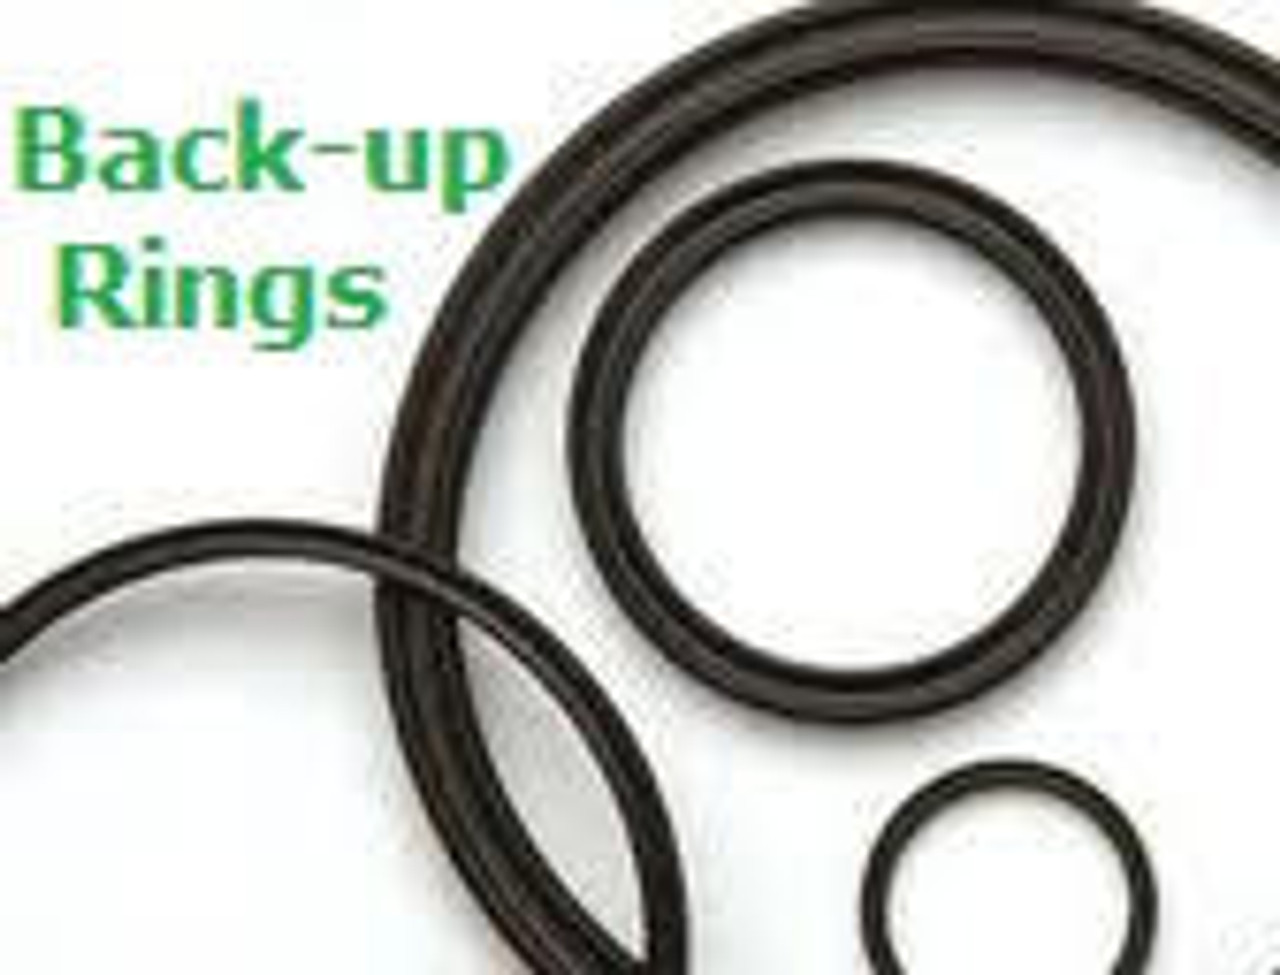 Backup Rings  Buna Size 170 Price for 1 pc